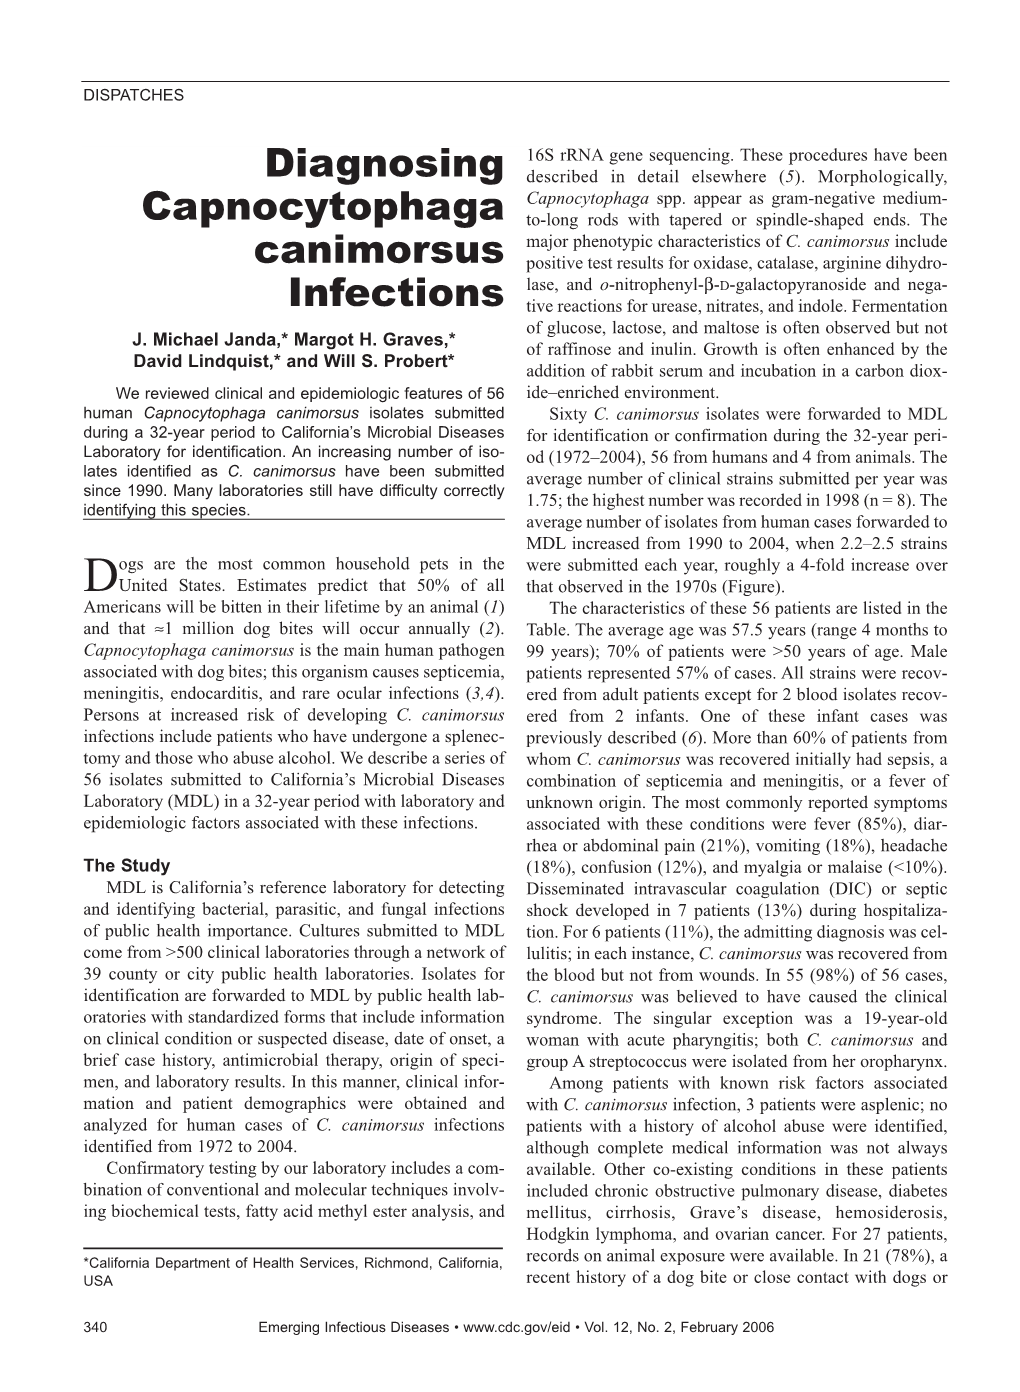 Diagnosing Capnocytophaga Canimorsus Infections